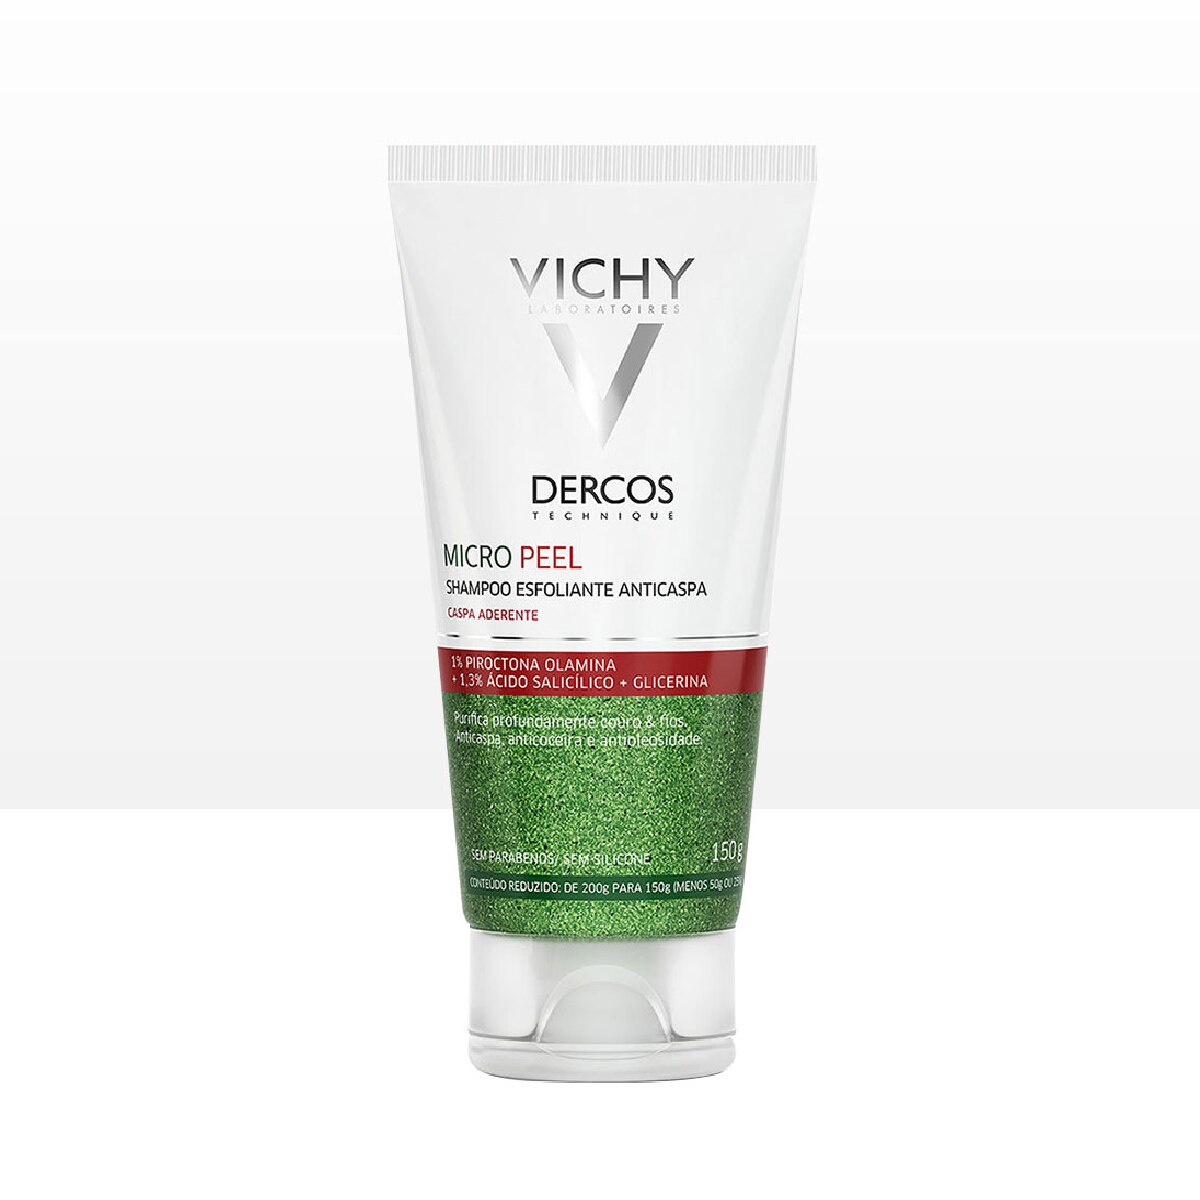 Shampoo Dercos Vichy Micro Peel 150g